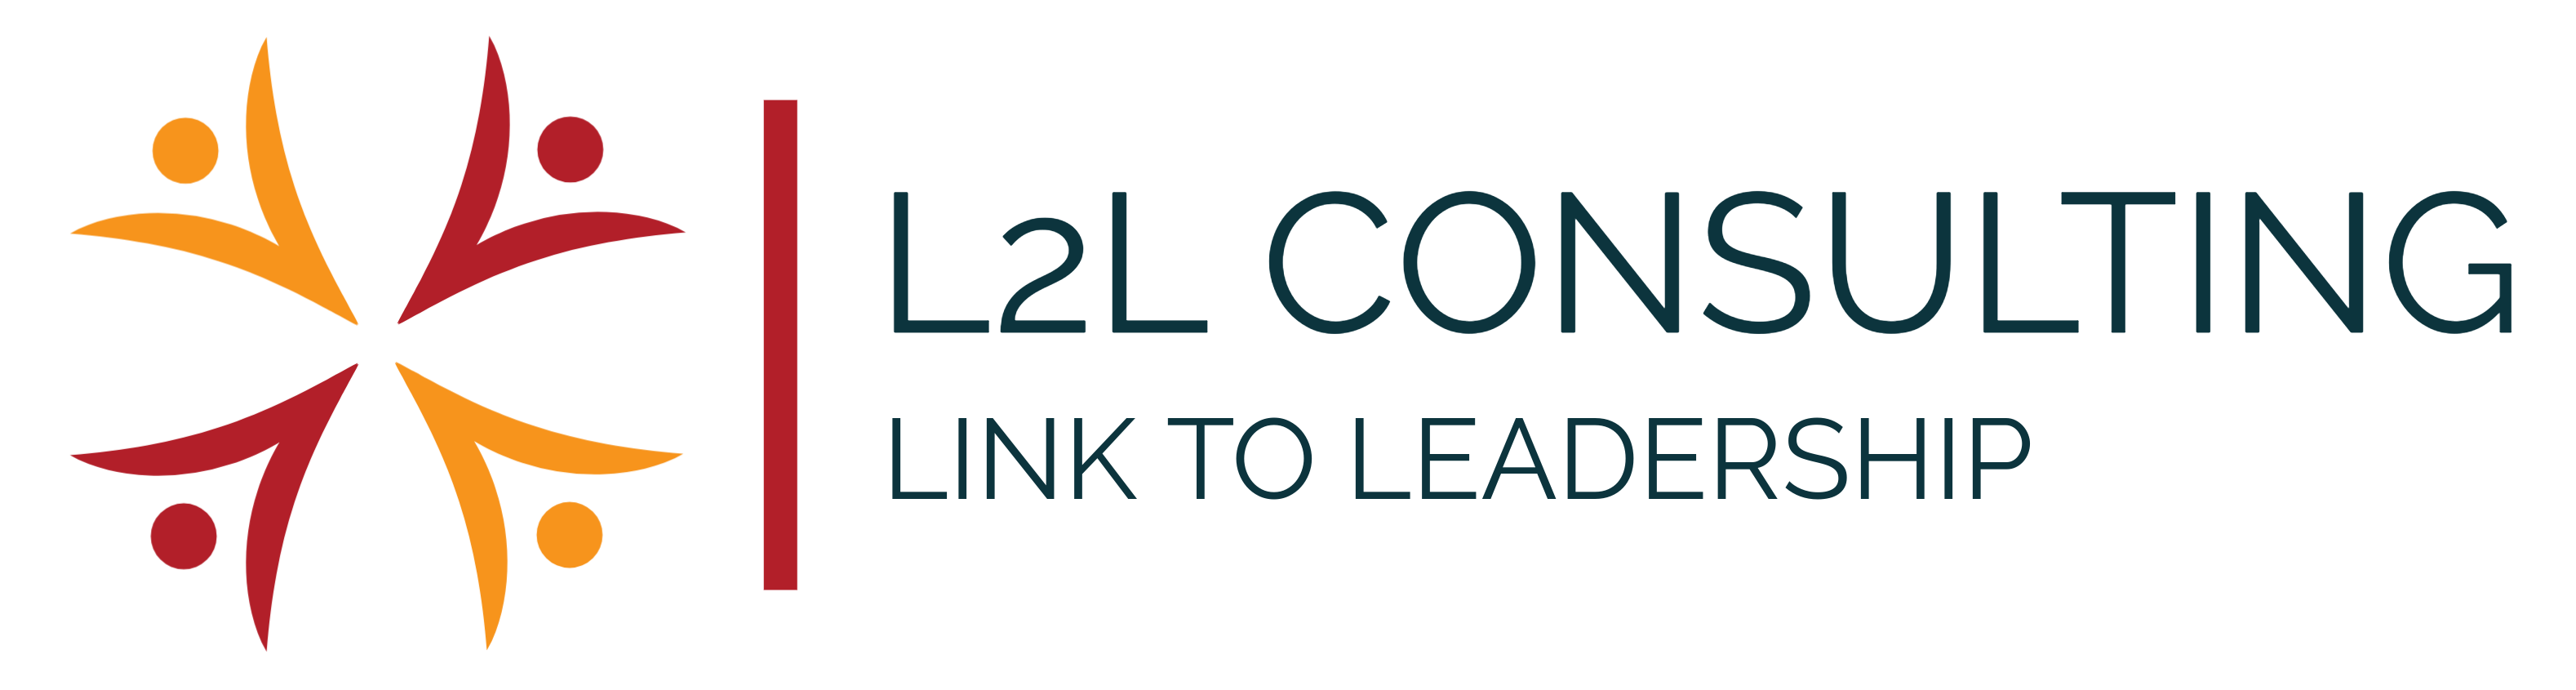 L2L Consulting